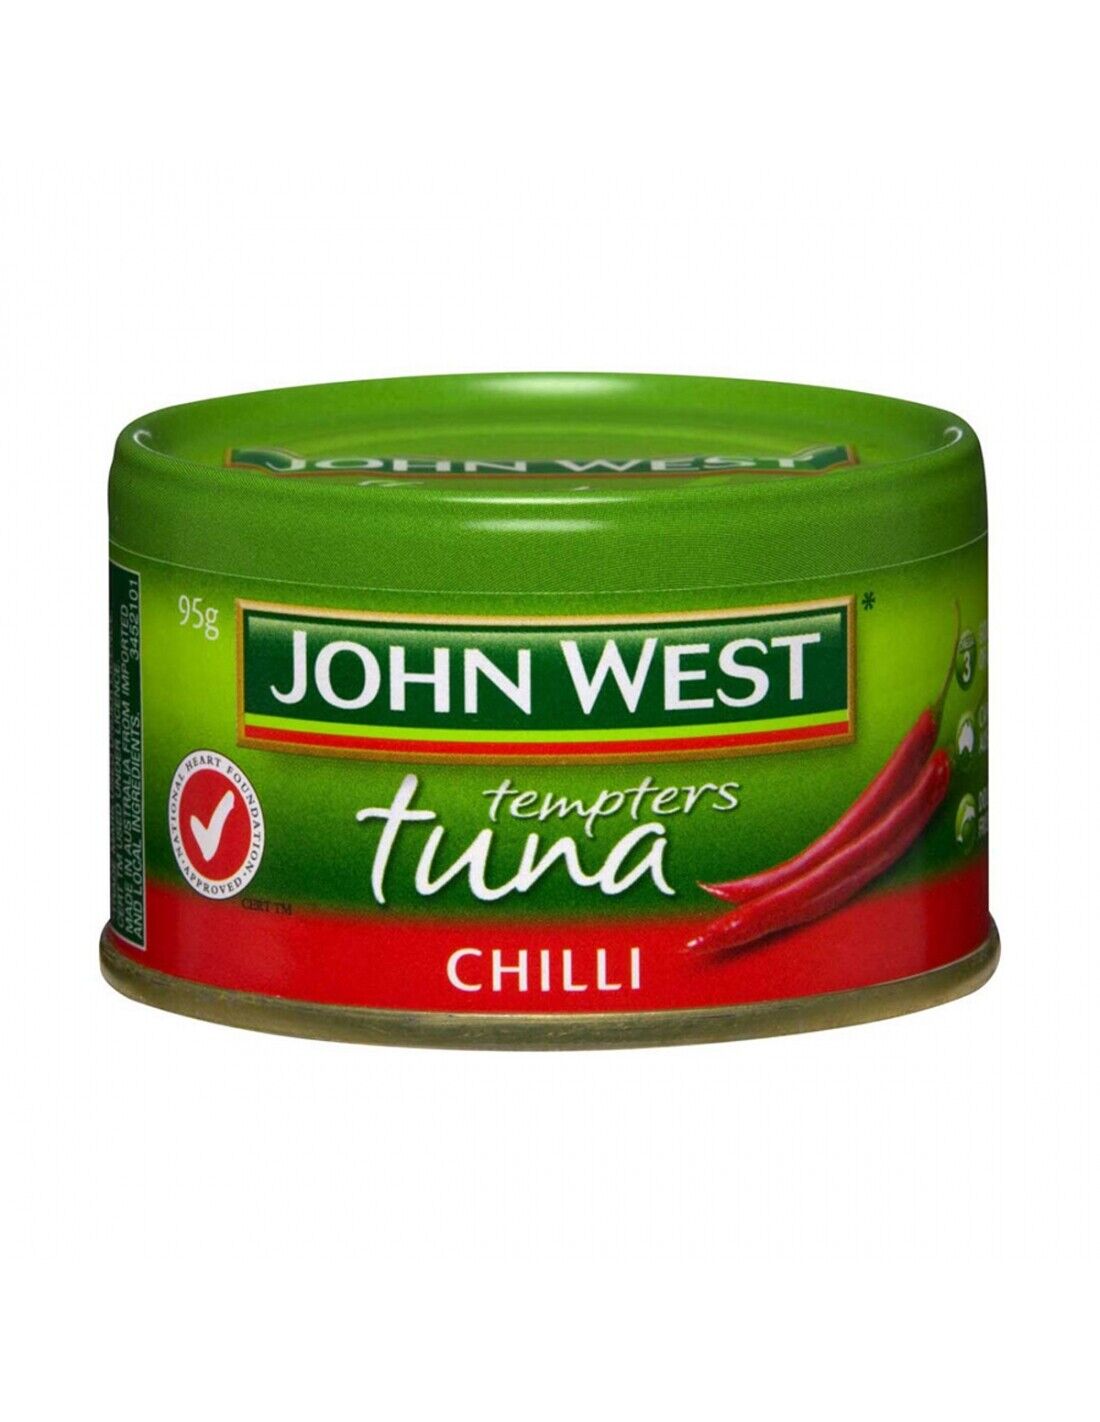 John West Tuna Chilli 95gm